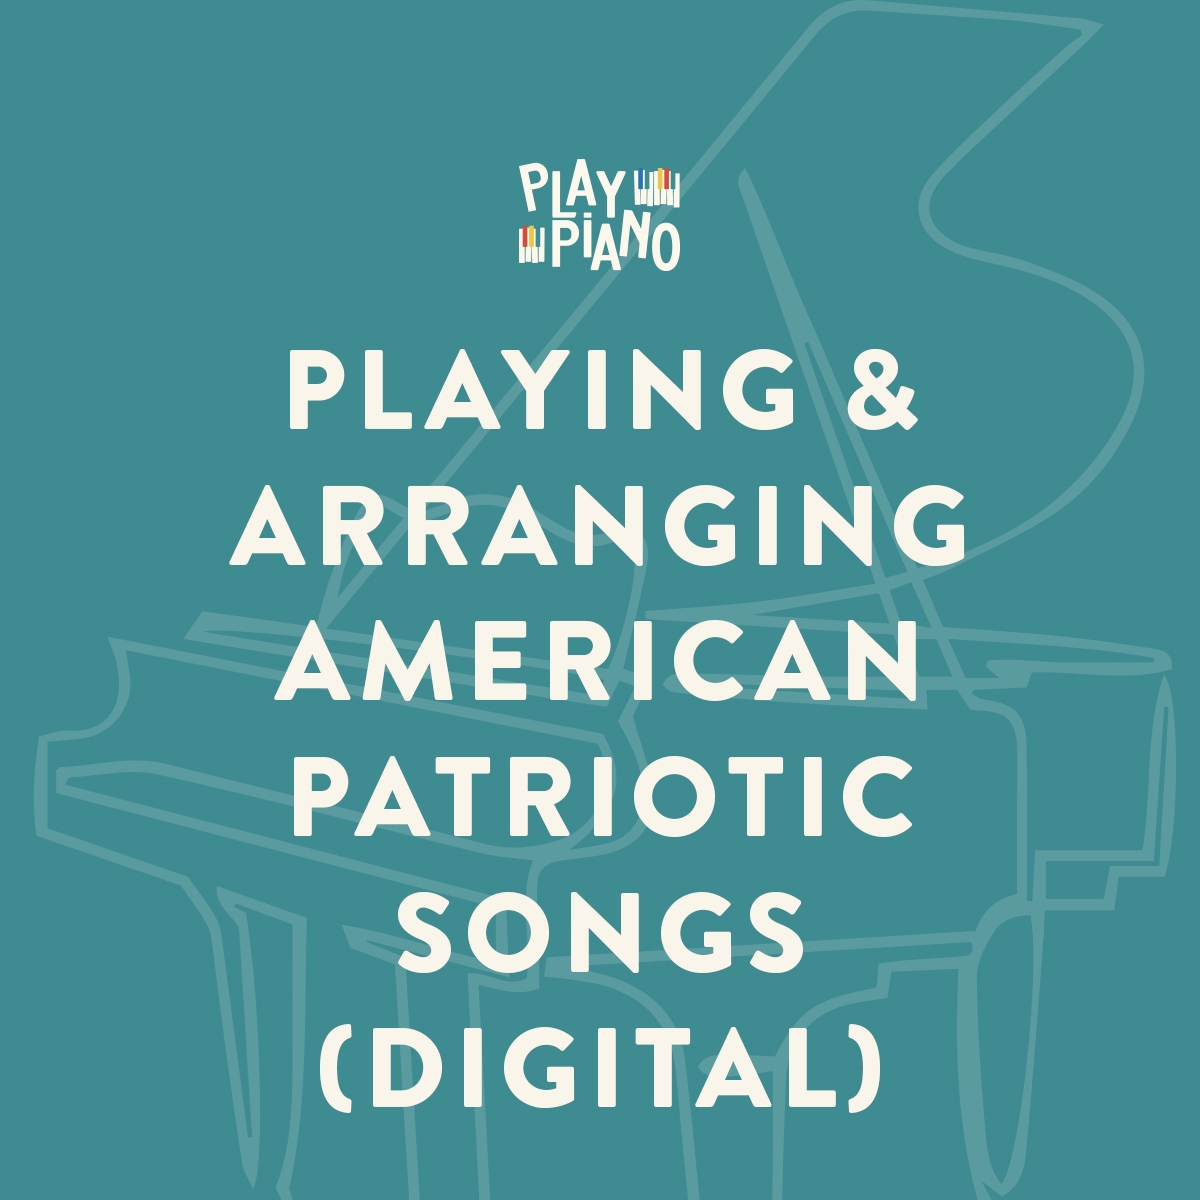 Playing & Arranging American Patriotic Songs (Digital) - PlayPiano